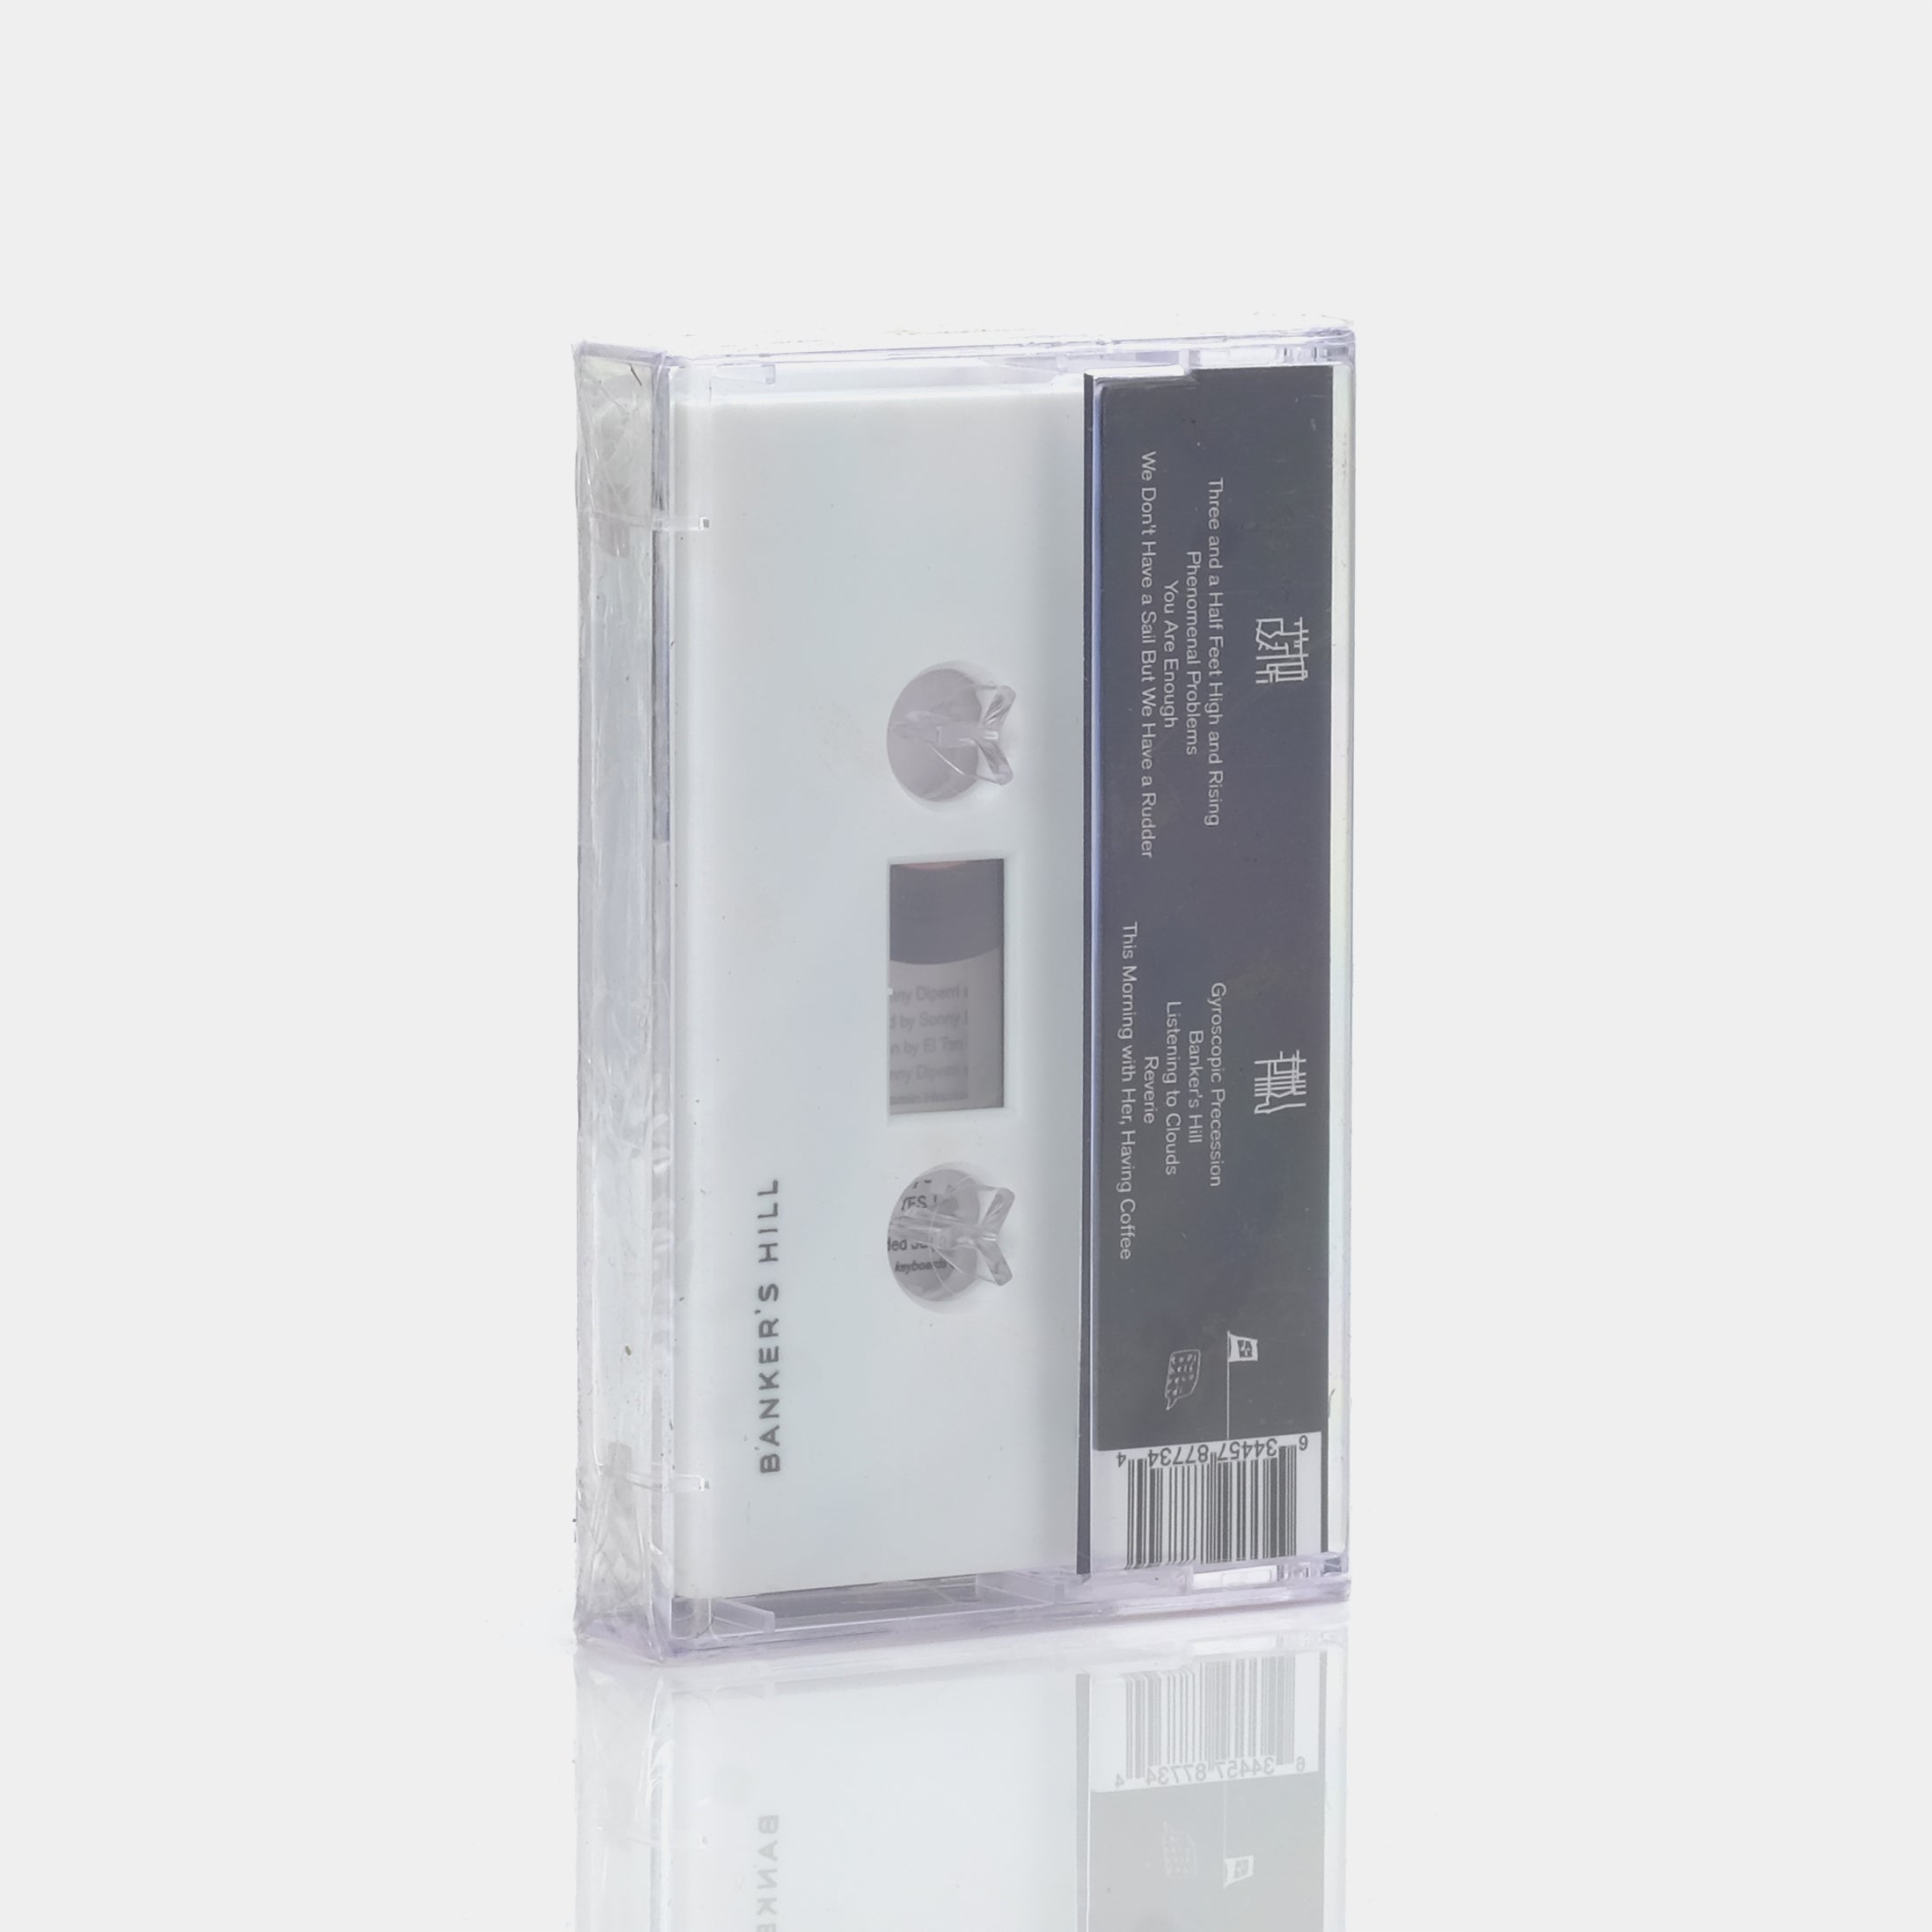 El Ten Eleven - Banker's Hill Cassette Tape